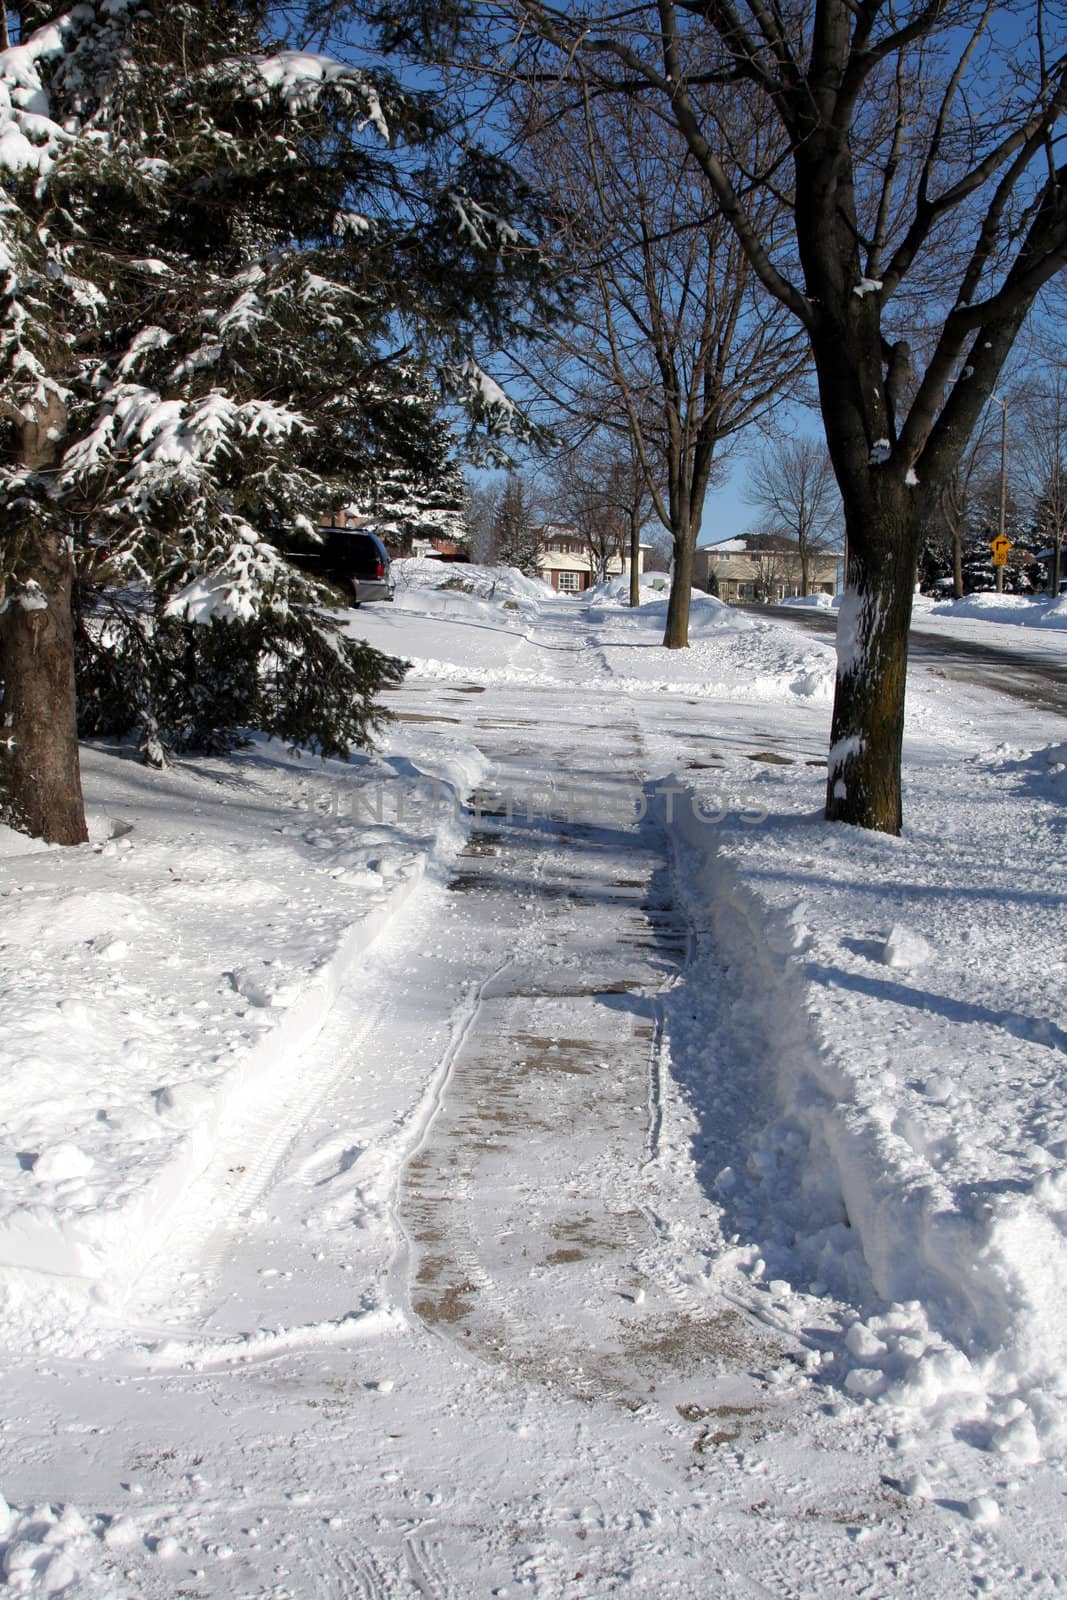 A freshly shoveled sidewalk after a winter snow fall.